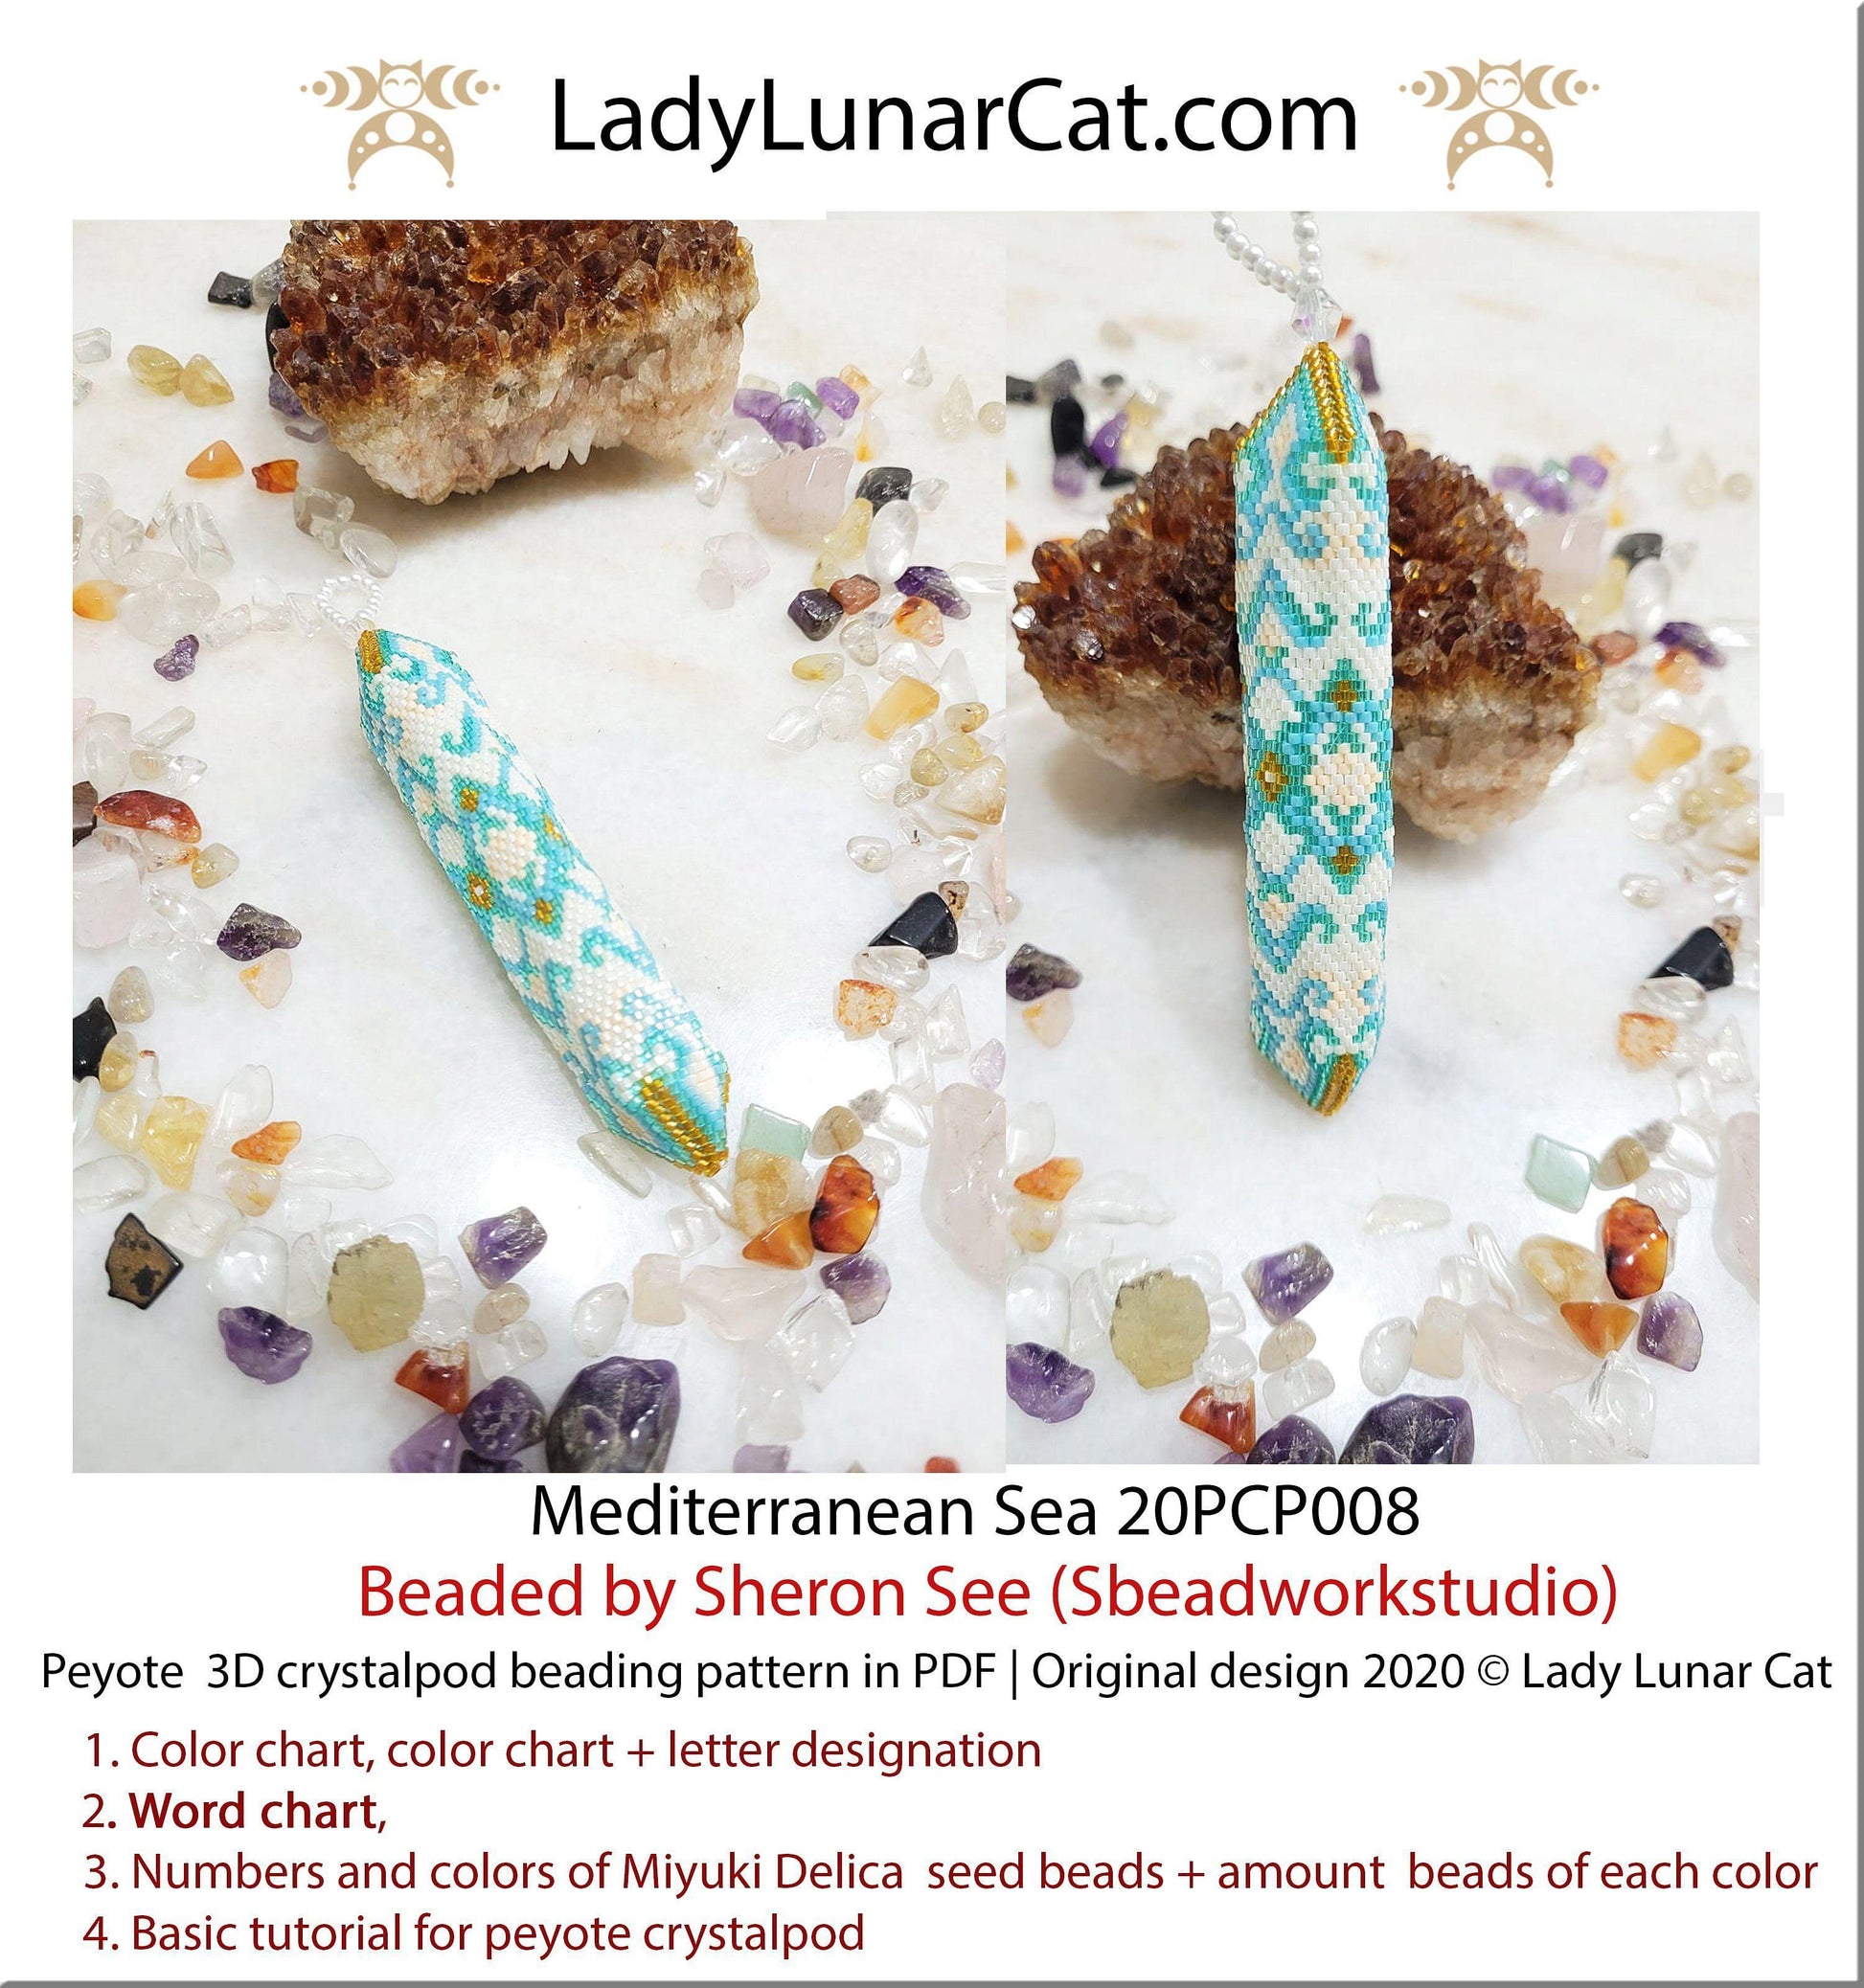 Peyote crystalpod pattern for beading - Mediterranean Sea 20PCP008, beaded ornament tutorial LadyLunarCat